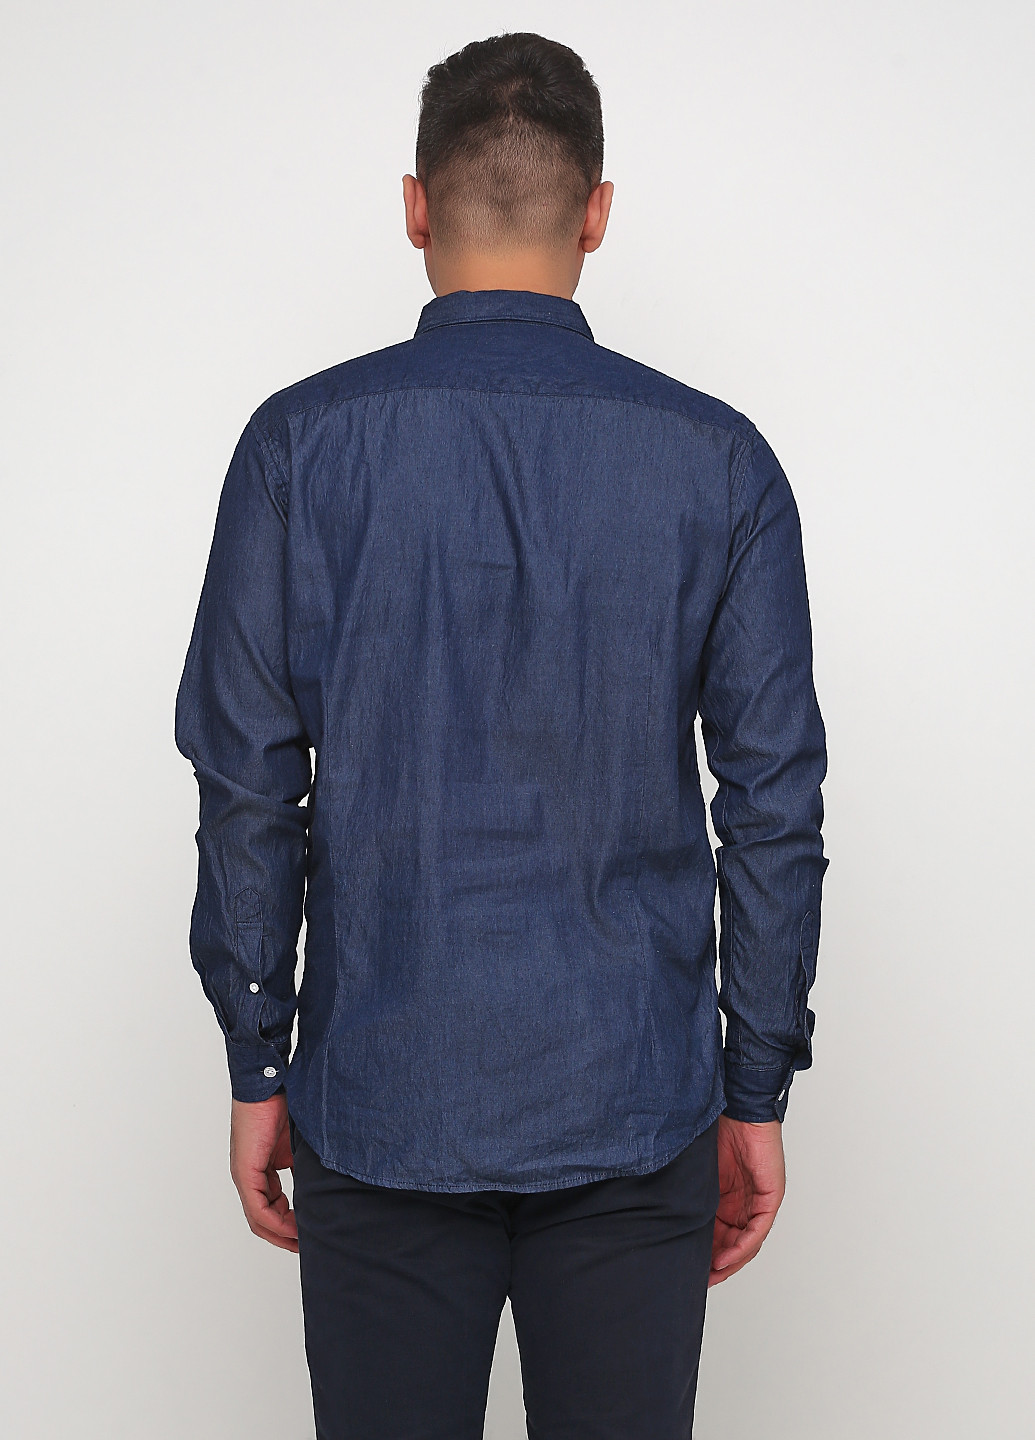 Темно-синяя кэжуал рубашка меланж Project с длинным рукавом